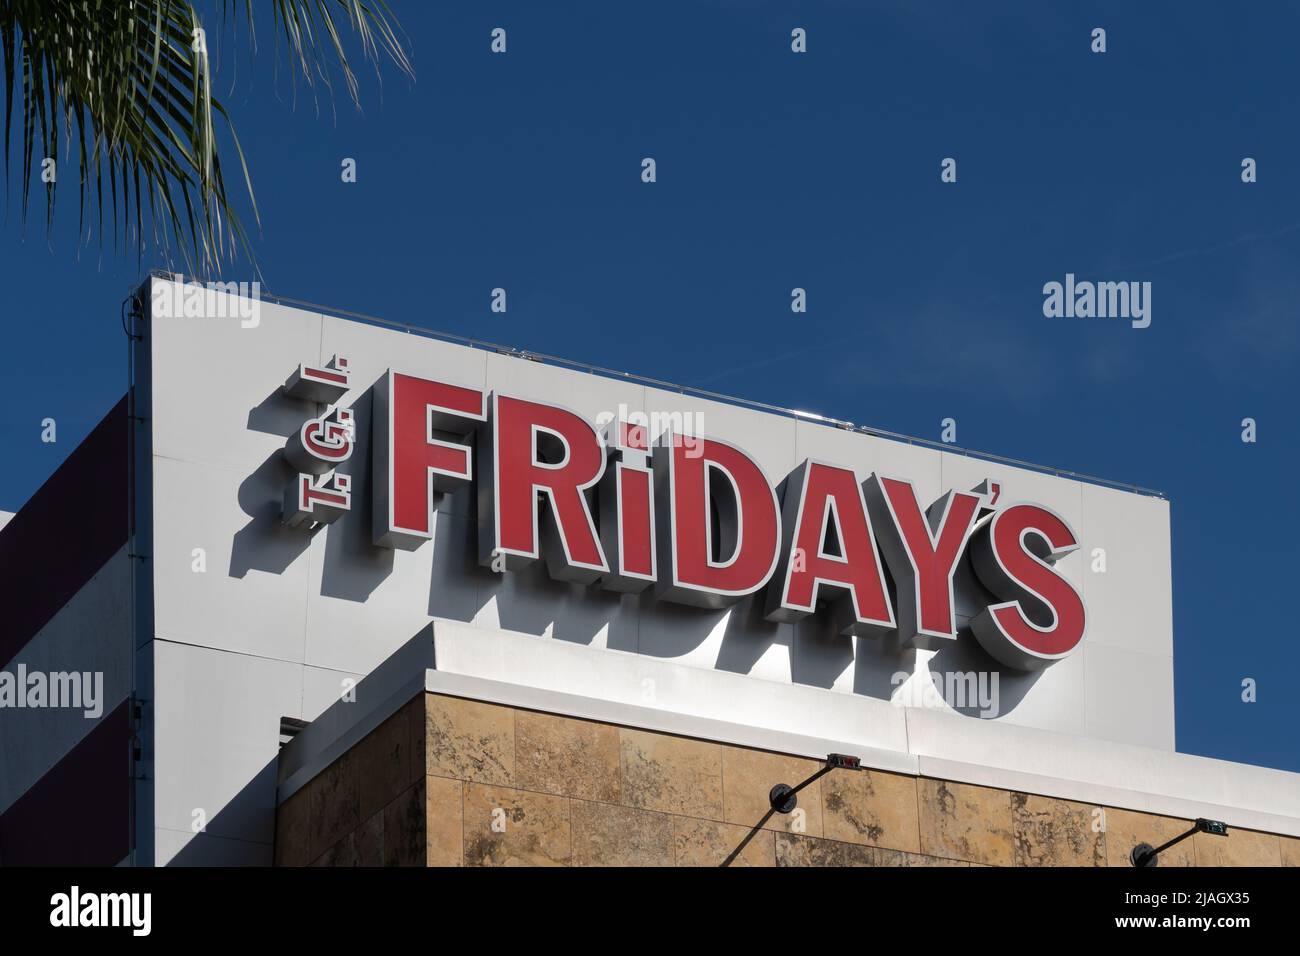 Orlando, Fl, USA - January 6, 2022: Close up of TGI Fridays restaurant sign on the building in Orlando, Fl, USA. Stock Photo